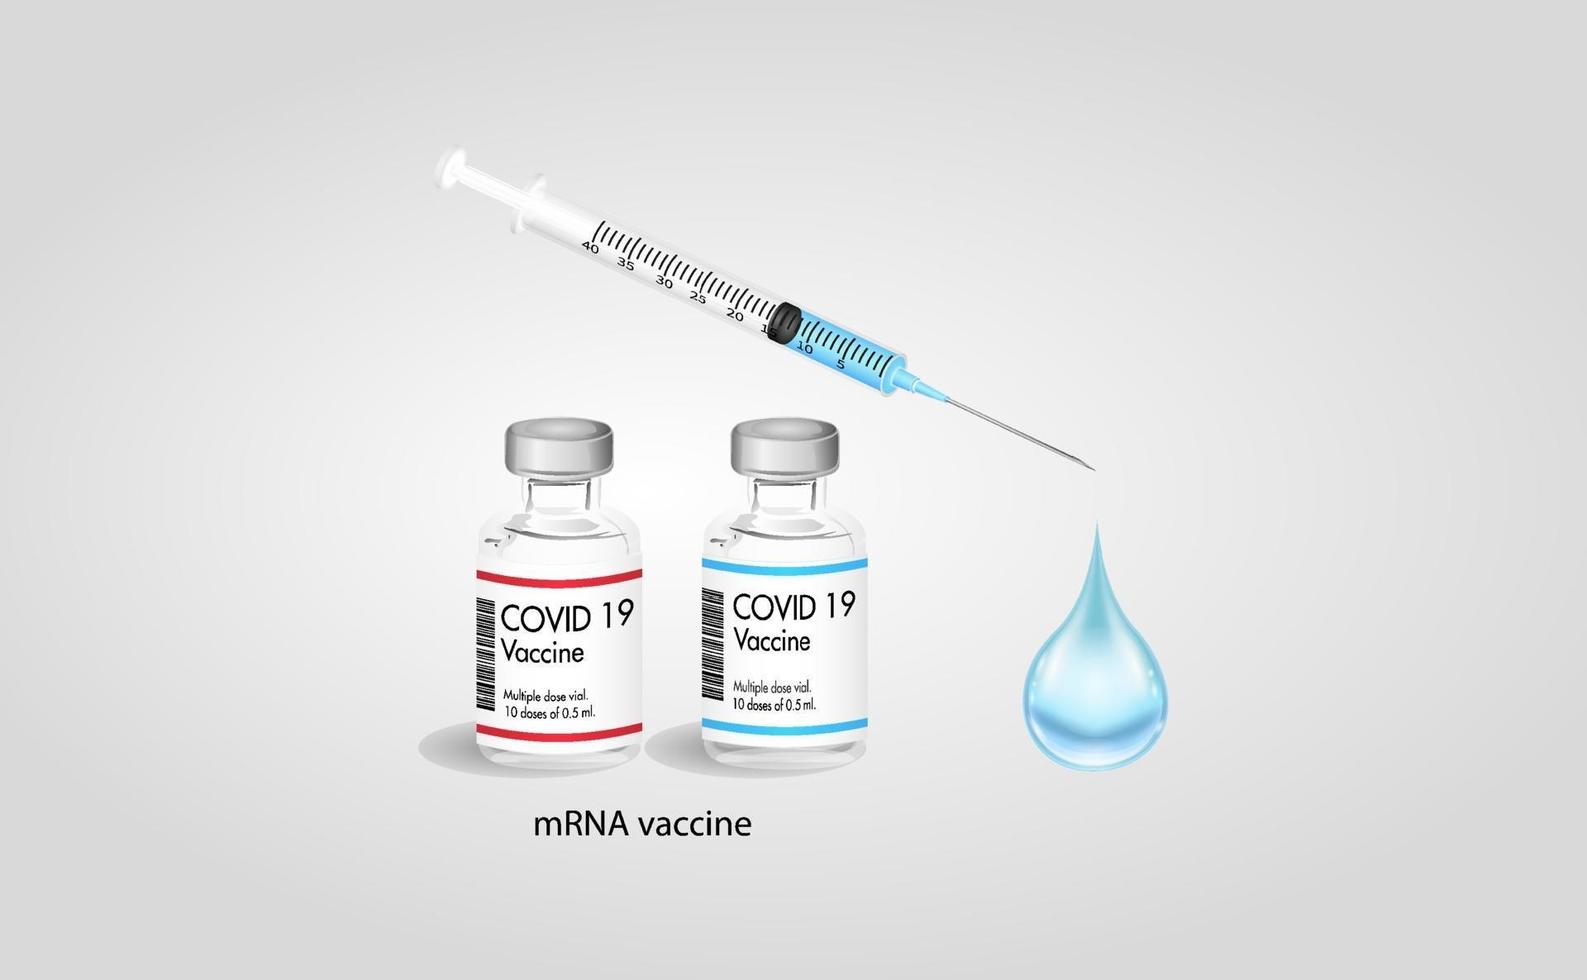 textura do vetor sars-cov-2 da vacina mrna.